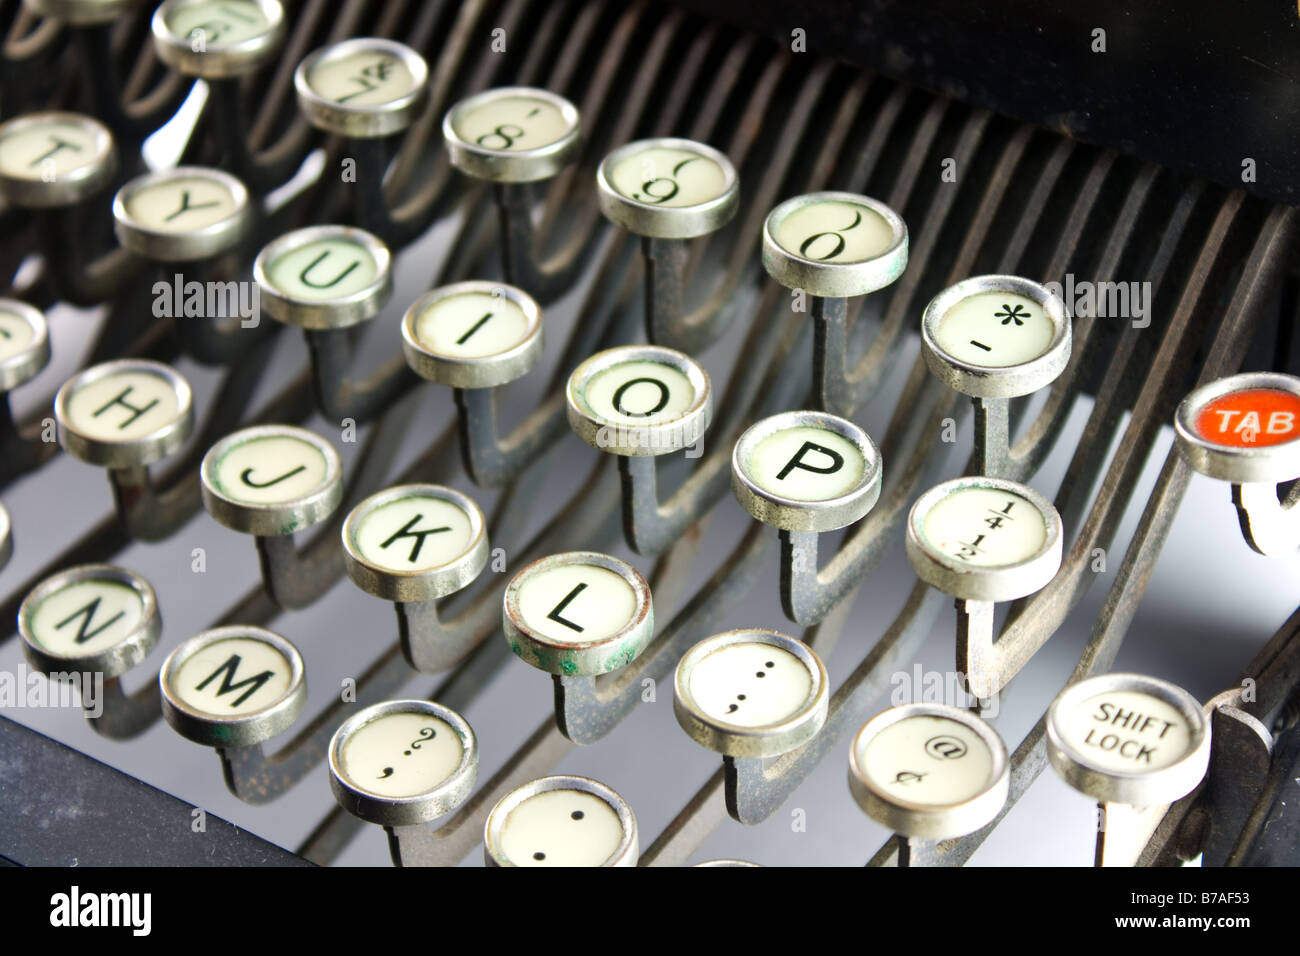 Manual typewriter keyboard with a red tab key Stock Photo